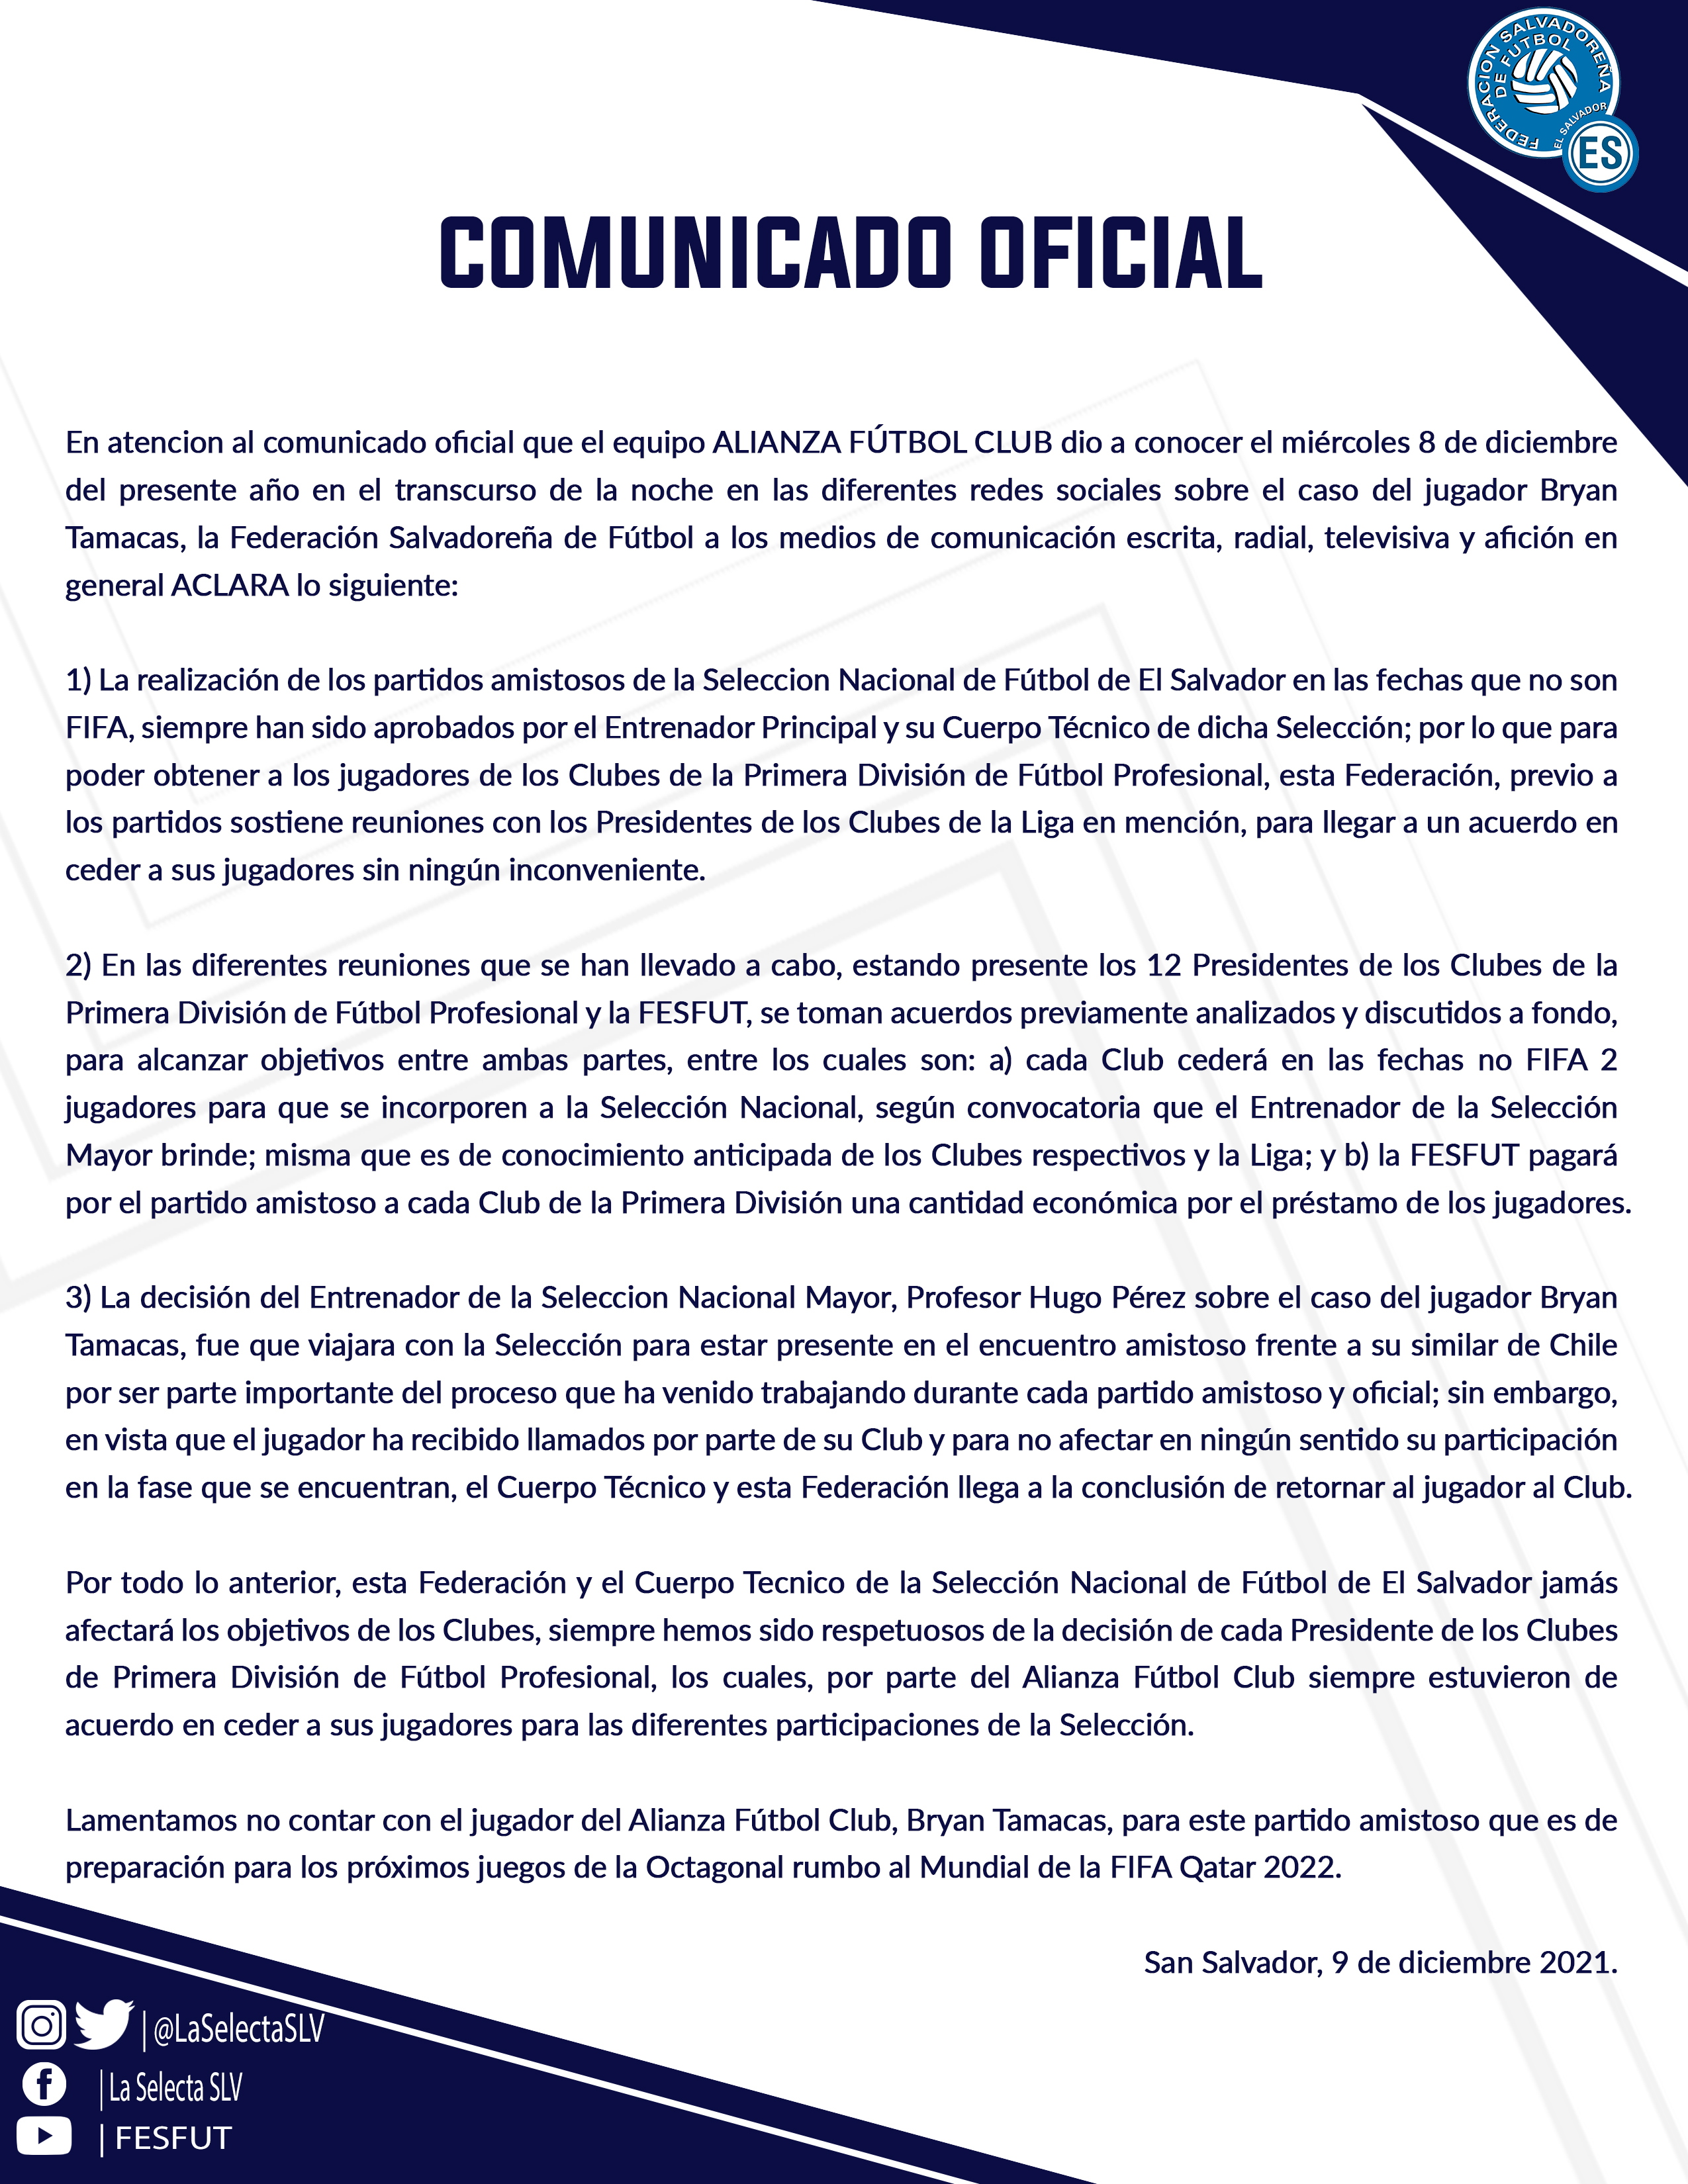 Comunicado oficial de la Federación Salvadoreña de Fútbol